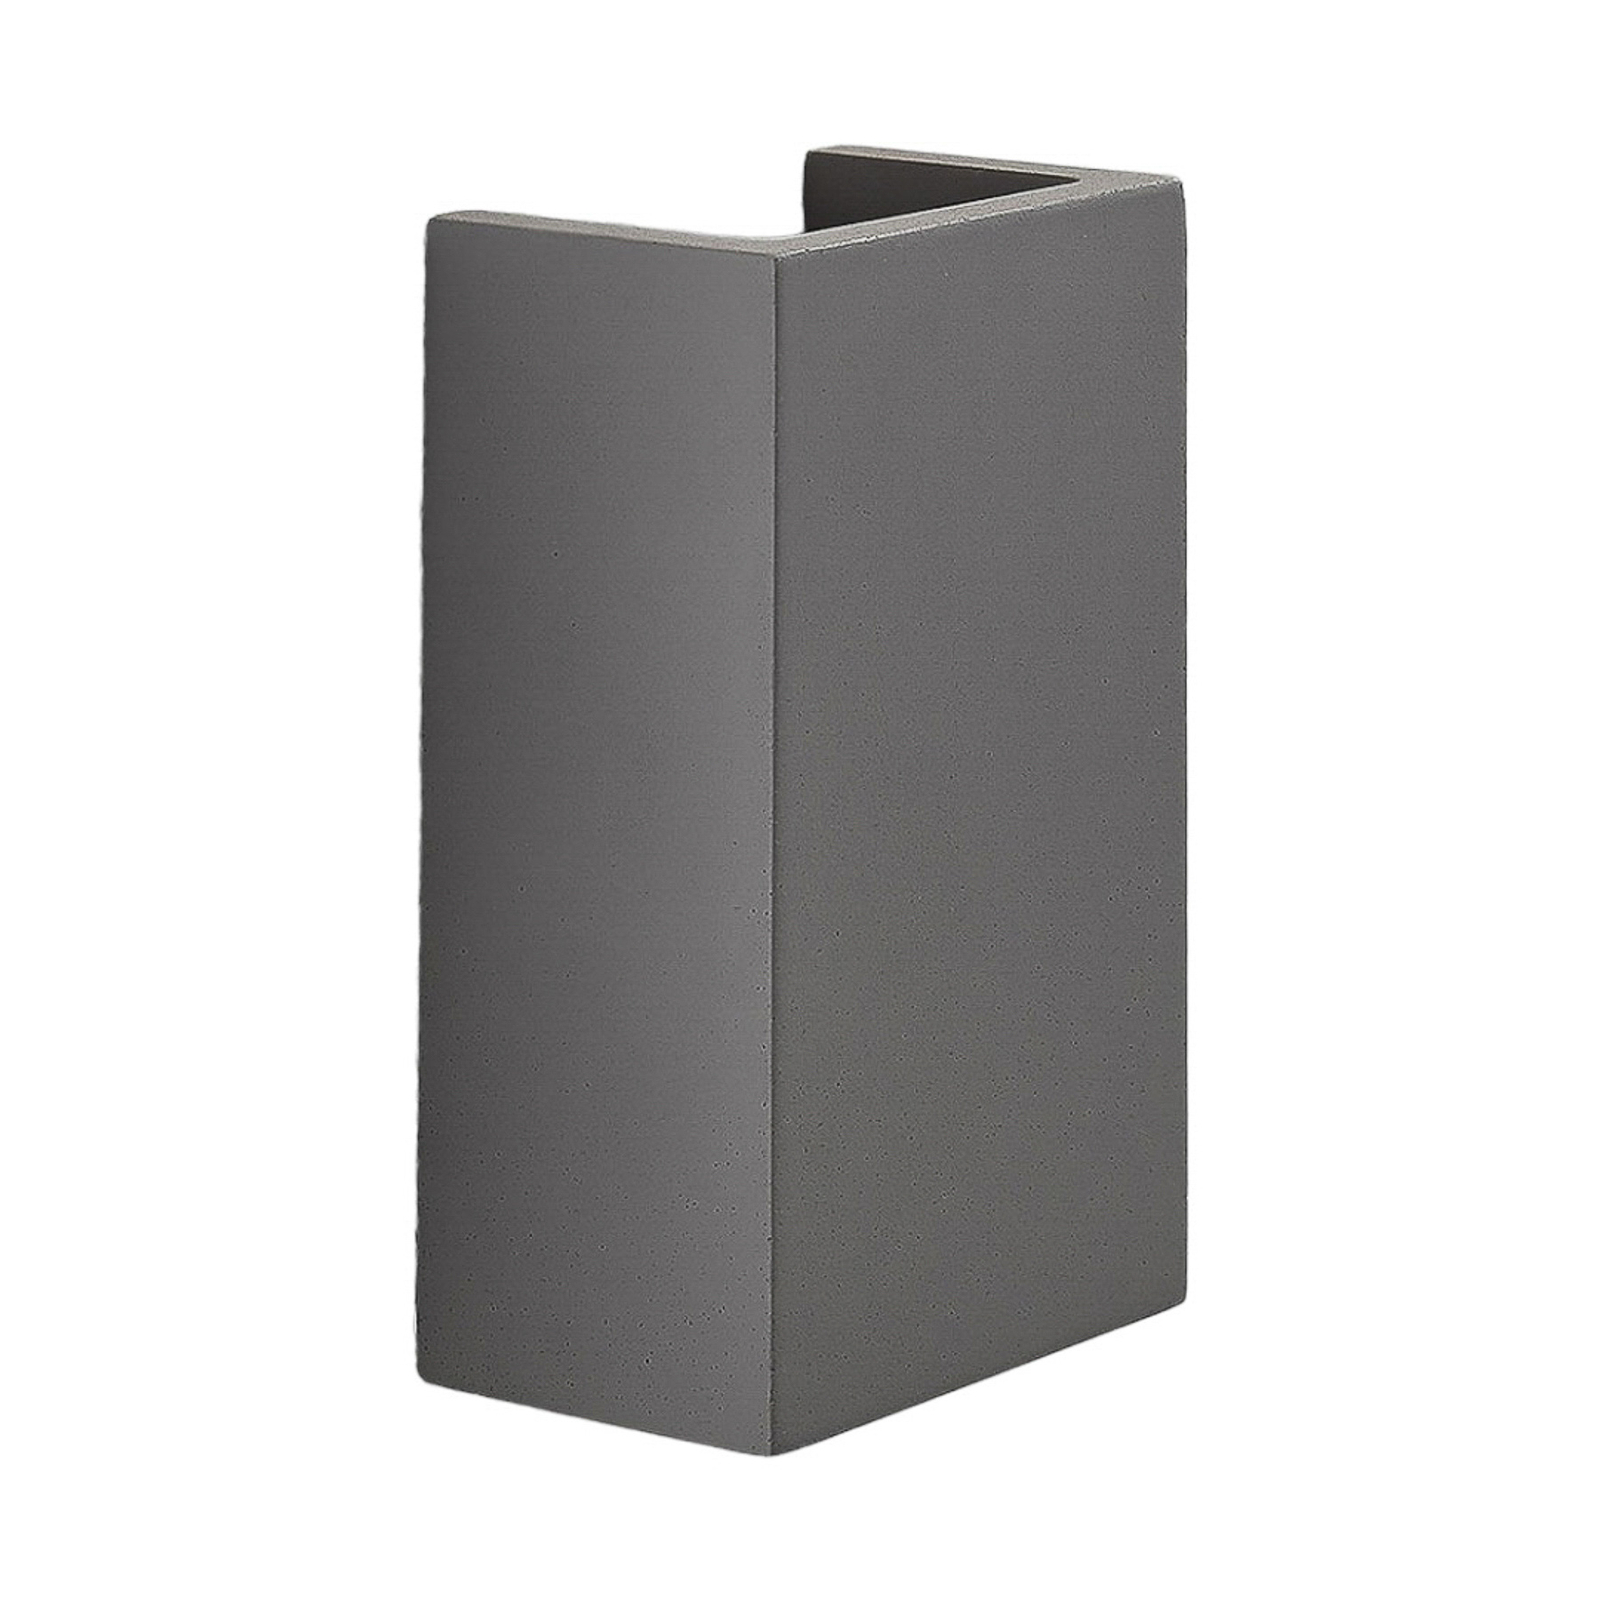 Smira concrete wall light in grey, 11 x 18 cm